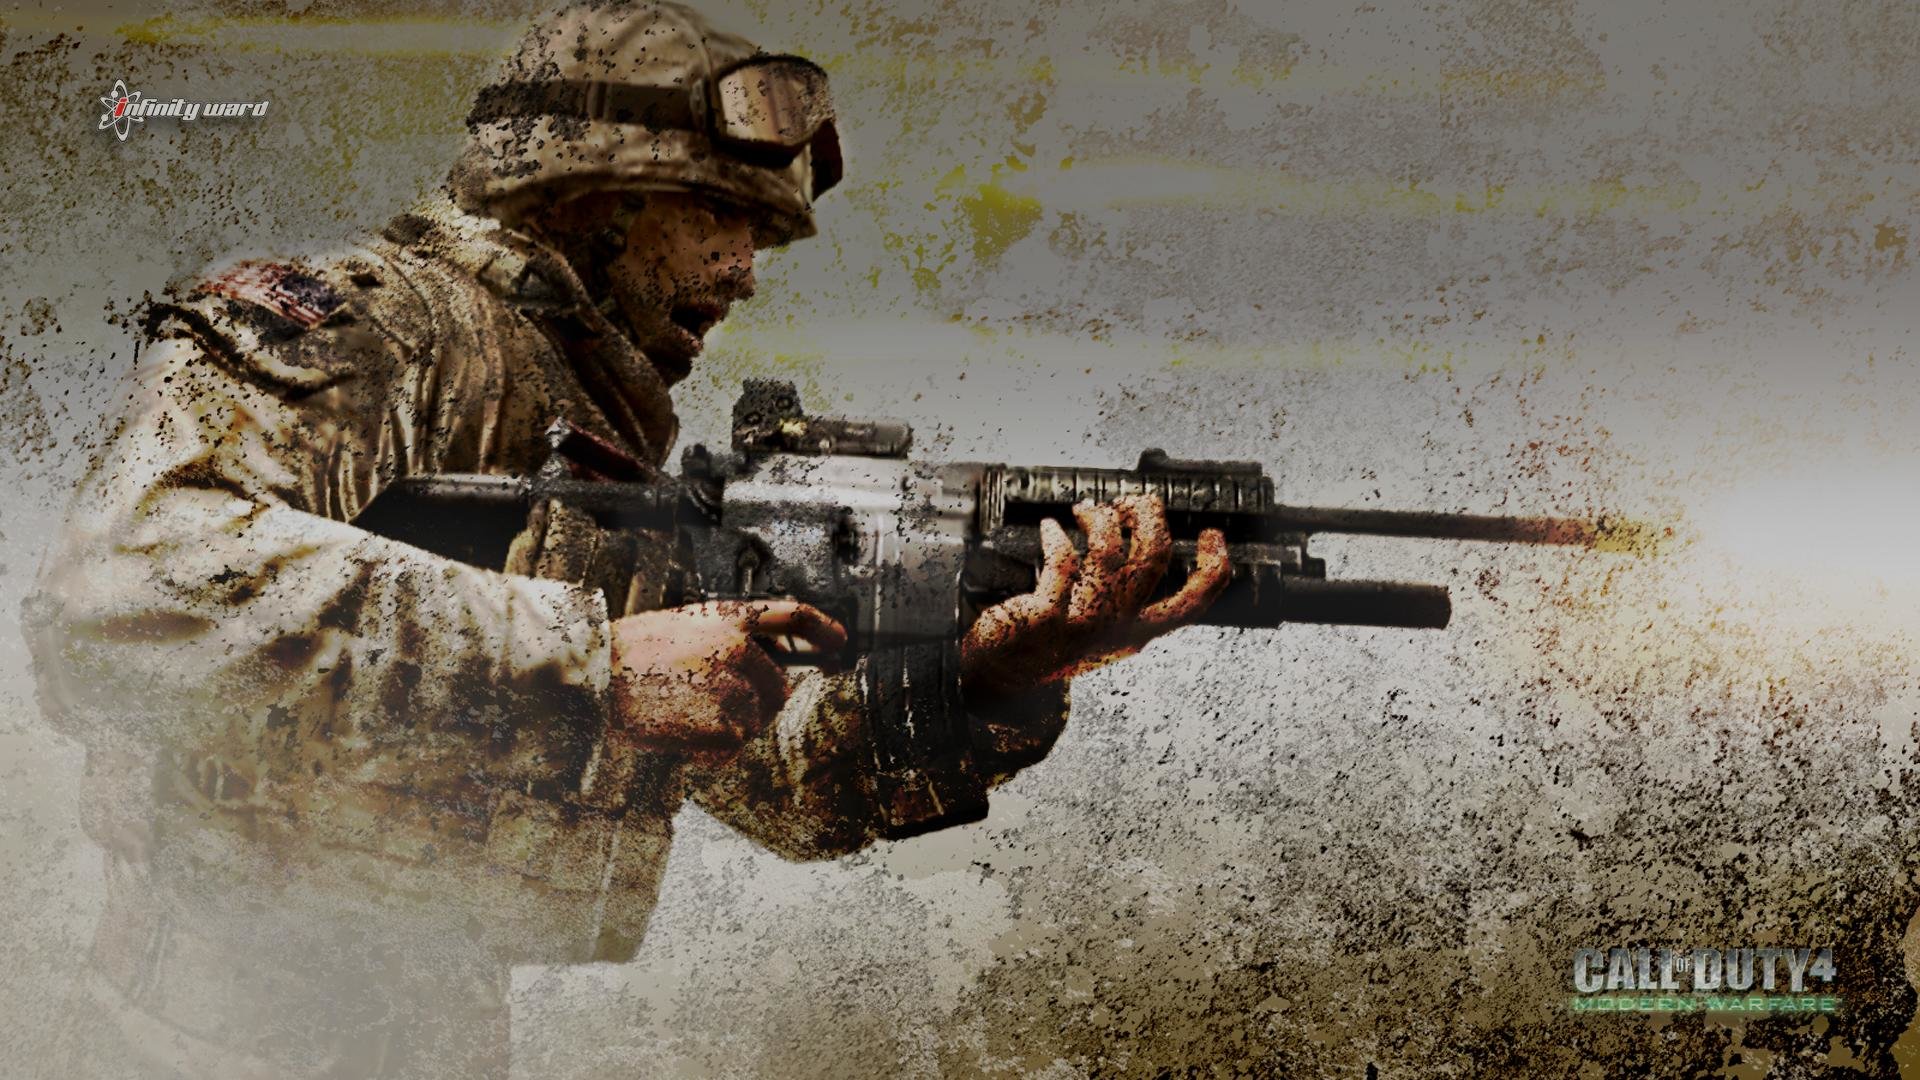 Best Call Of Duty 4: Modern Warfare wallpaper ID:20568 for High Resolution hd 1920x1080 PC